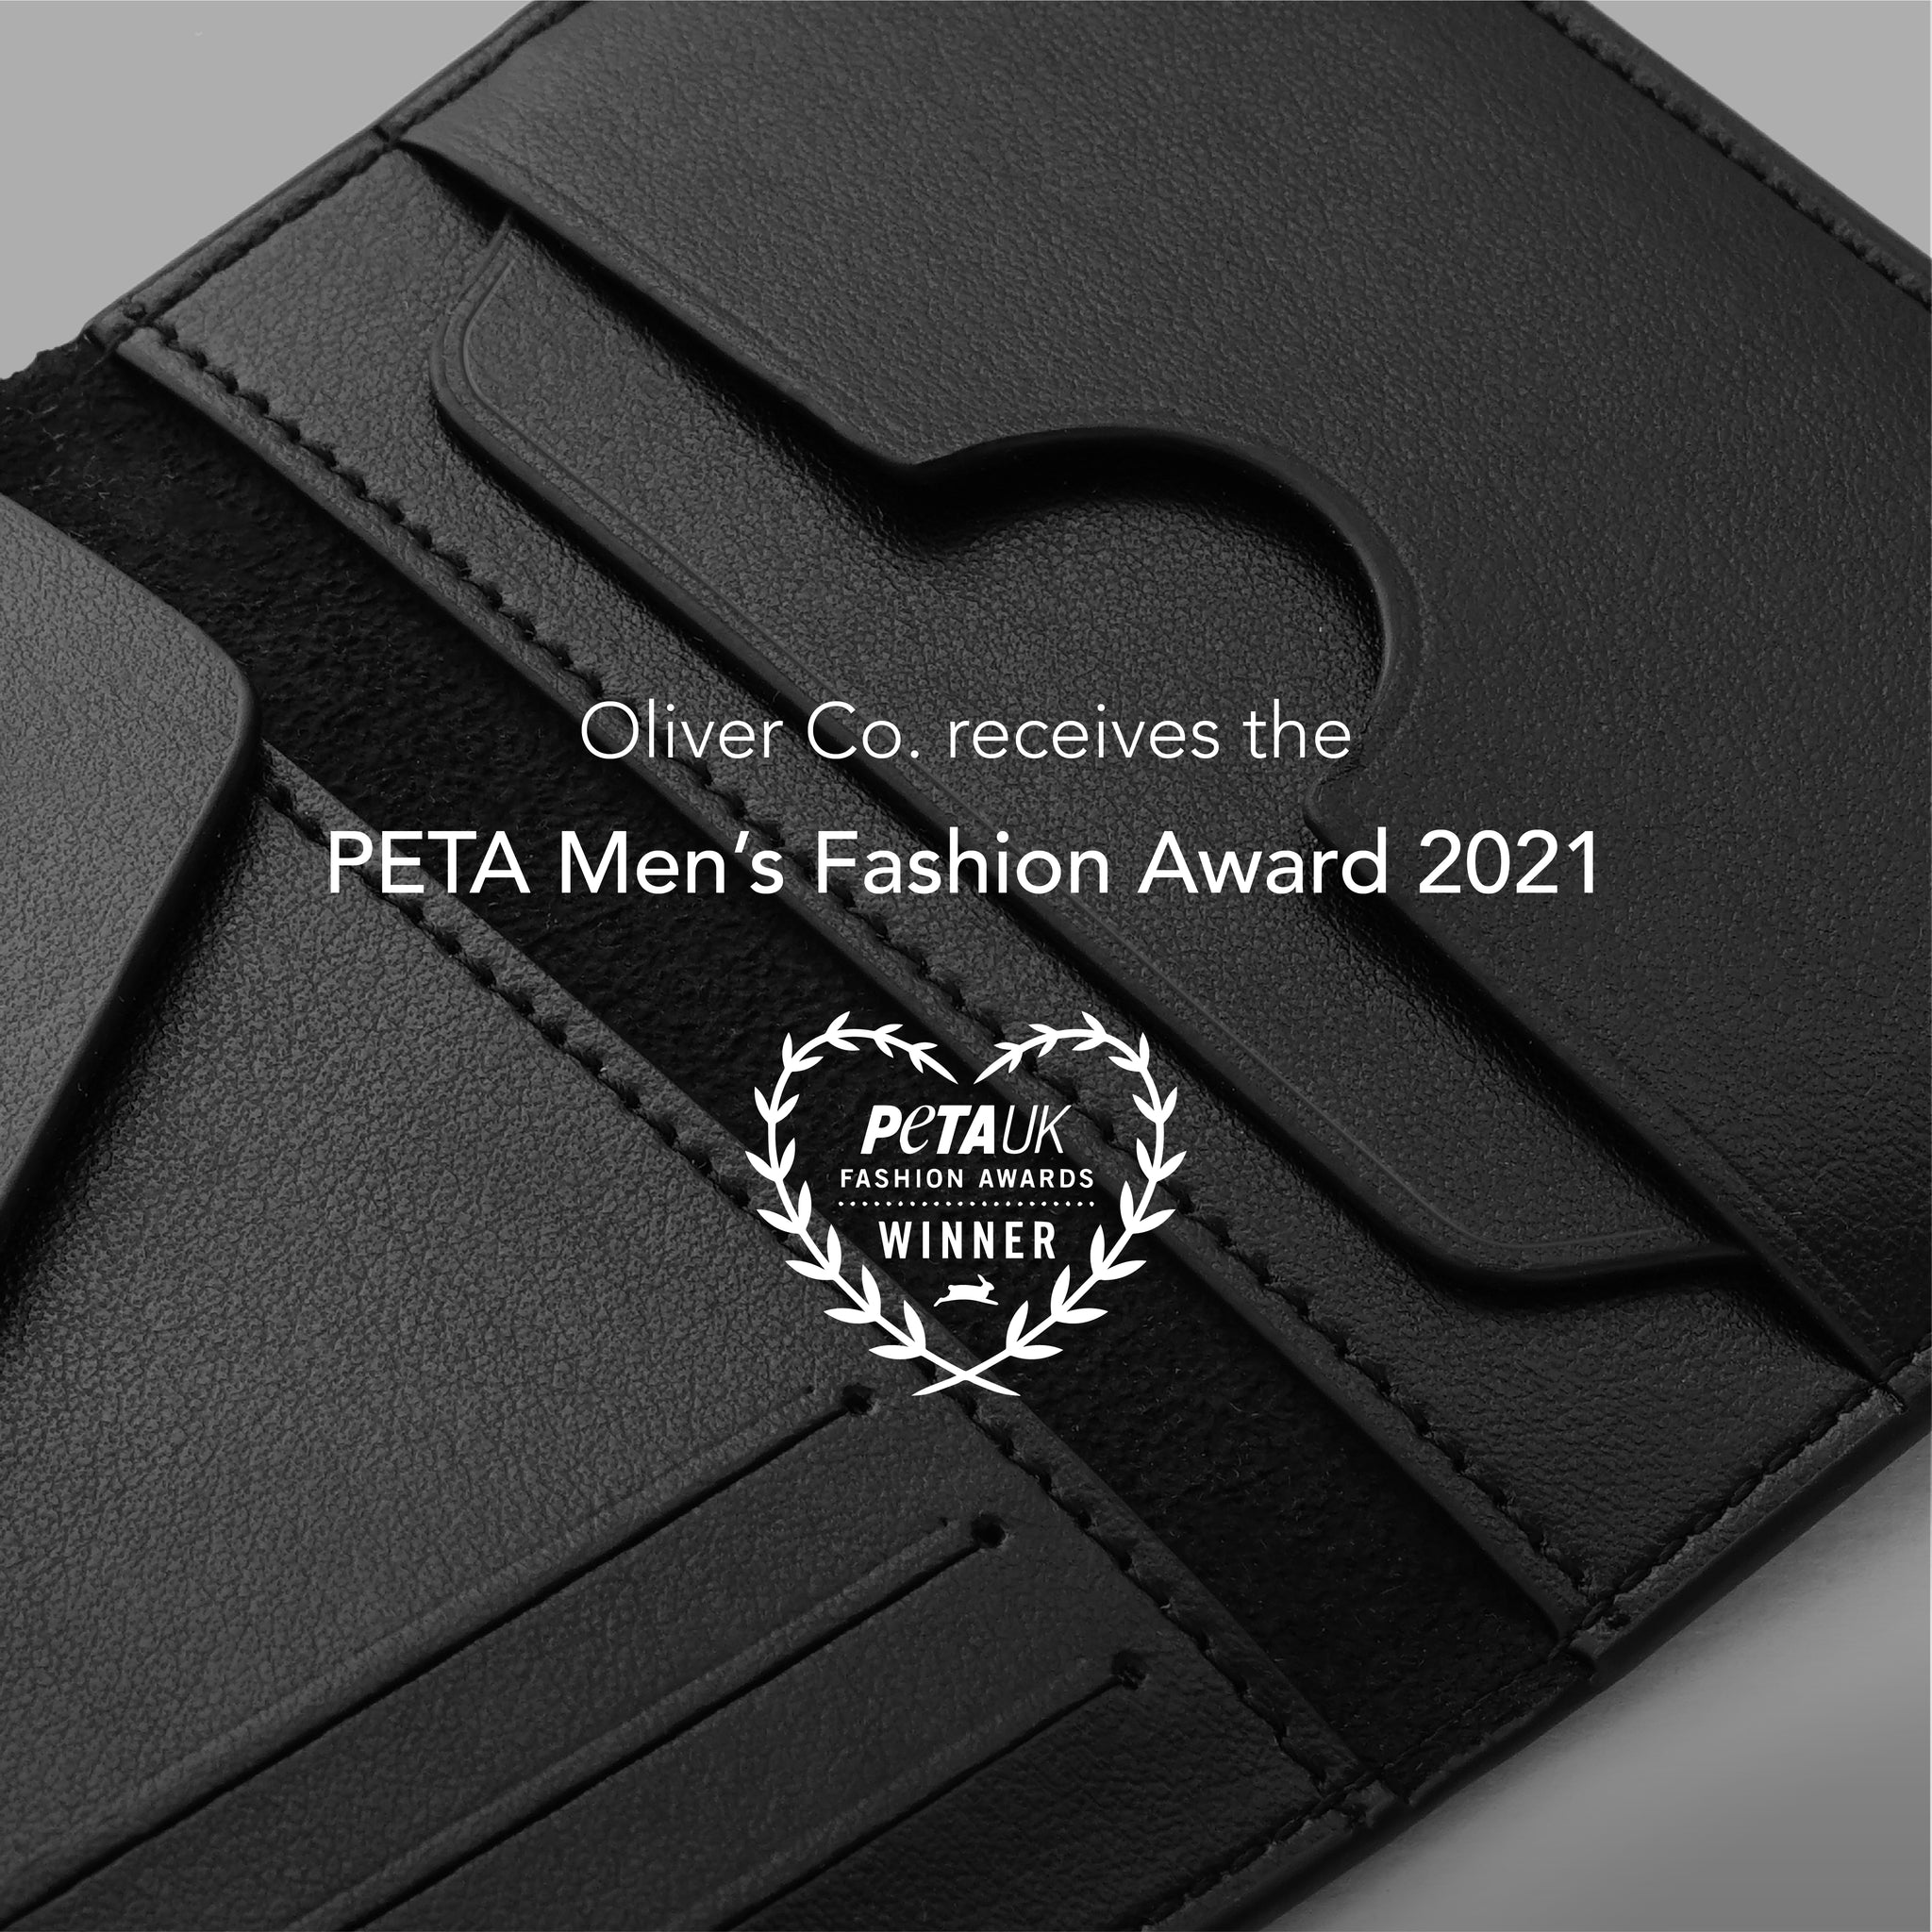 Oliver Co. wins PETA Men's Fashion Award 2021